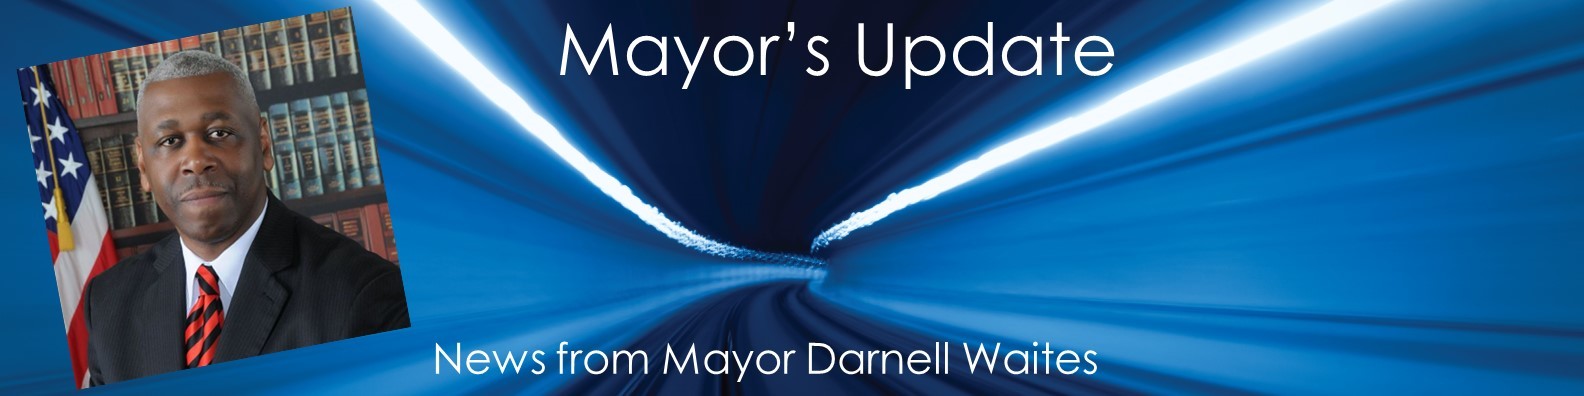 Mayors Update Banner